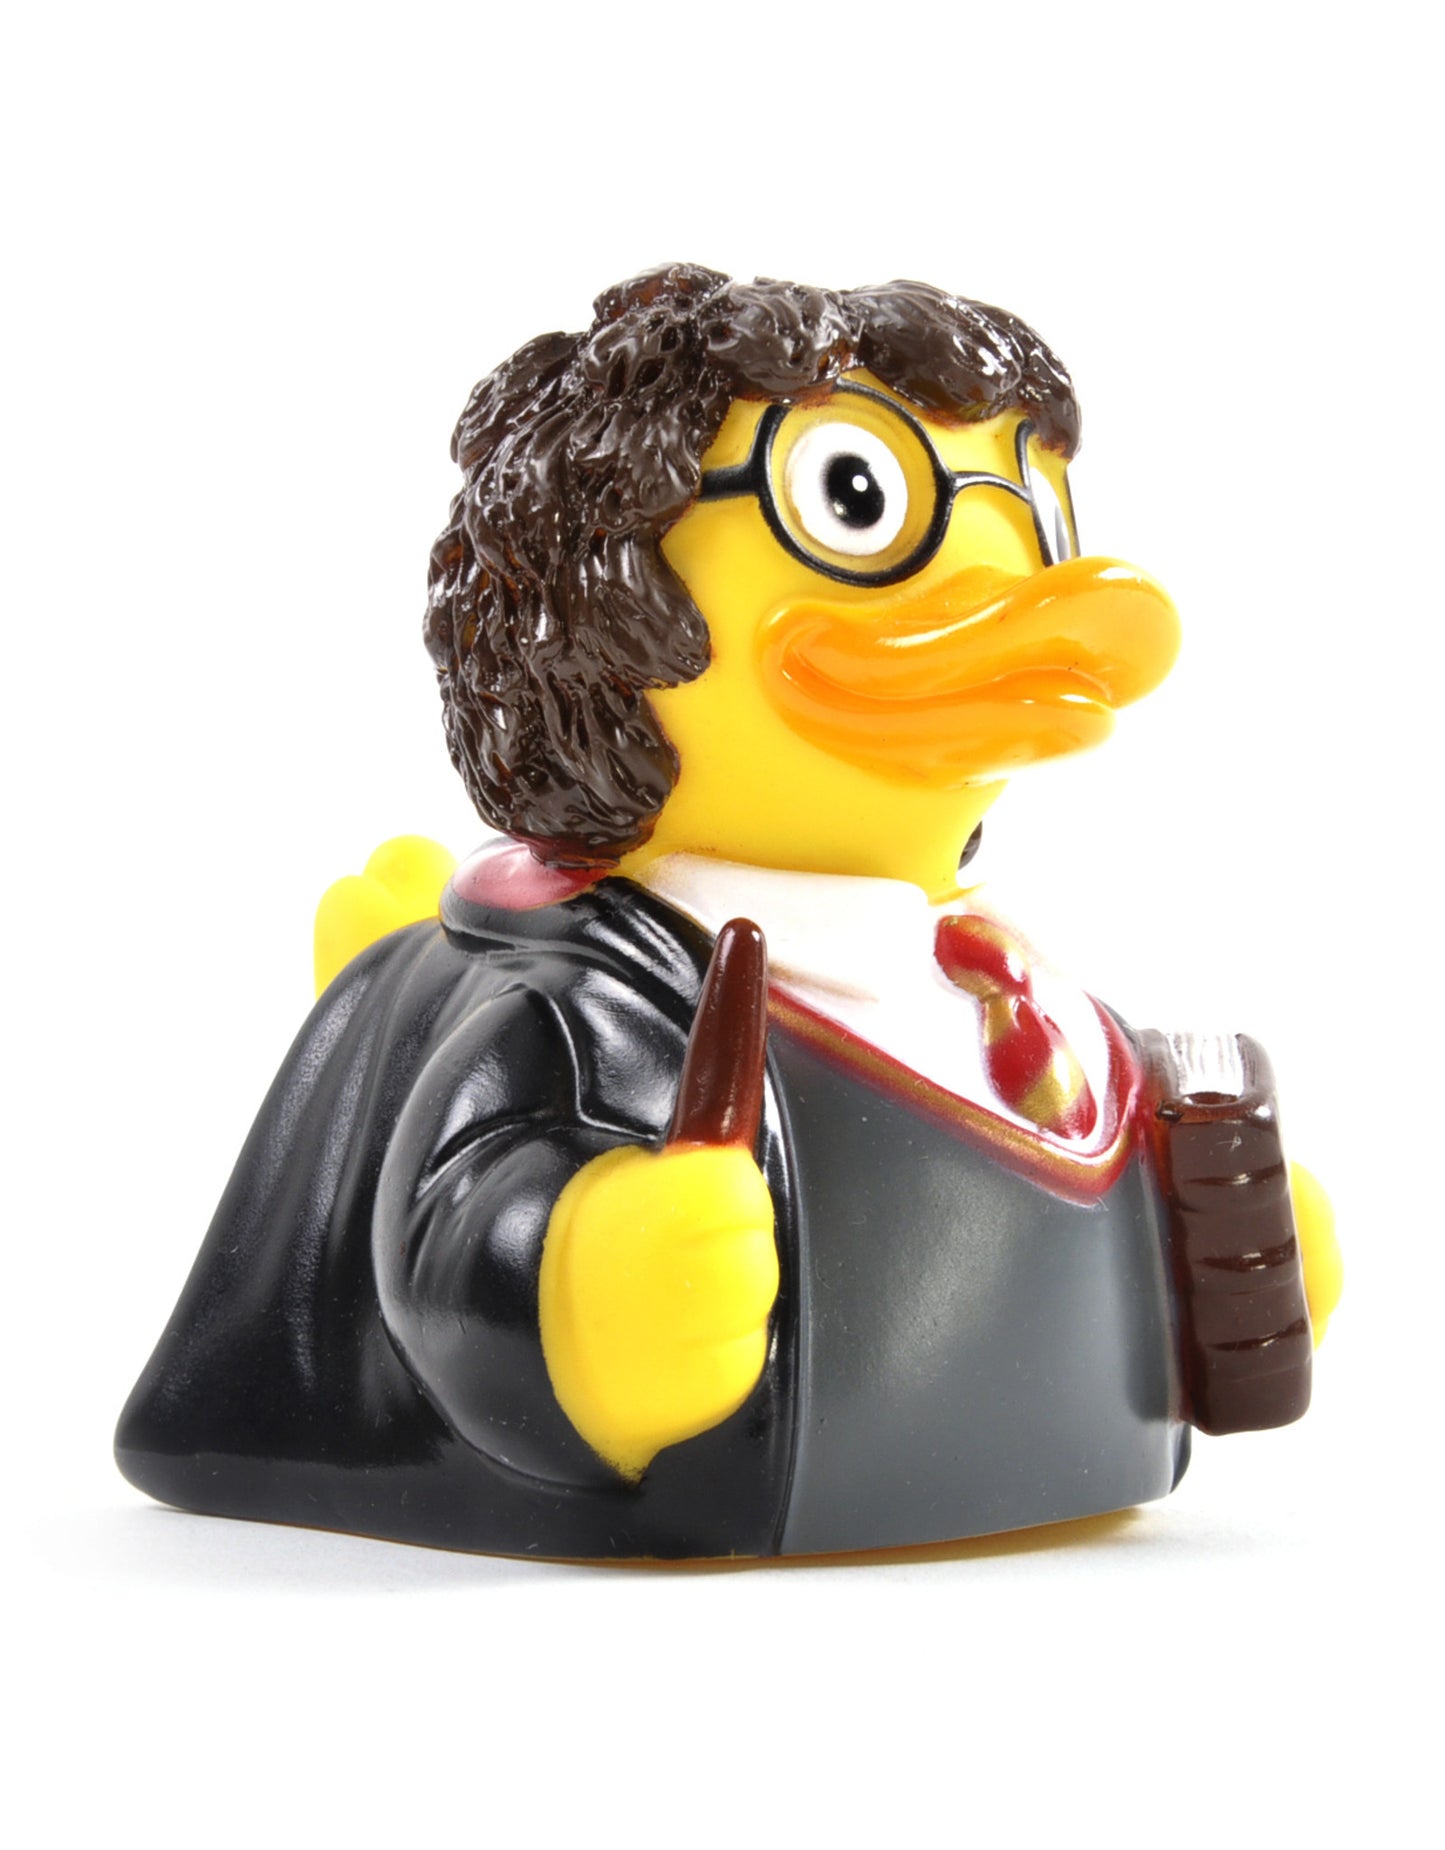 Harry Potter "Harry Ponder" Rubber Duck